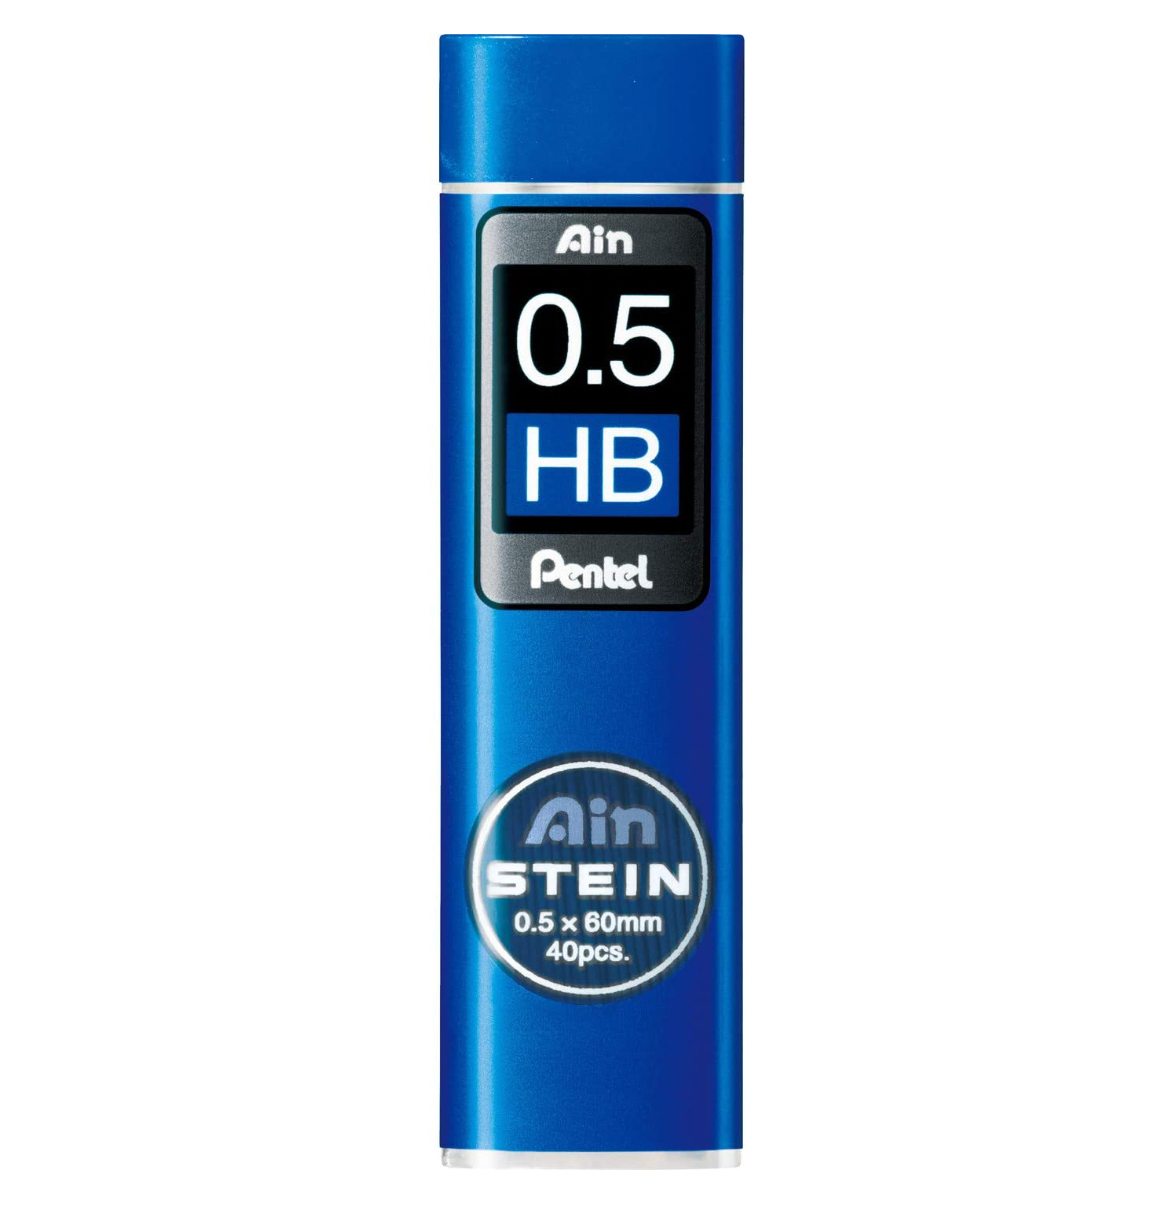 Pentel Ain Stein Mechanical Pencil Lead - 0.5 mm